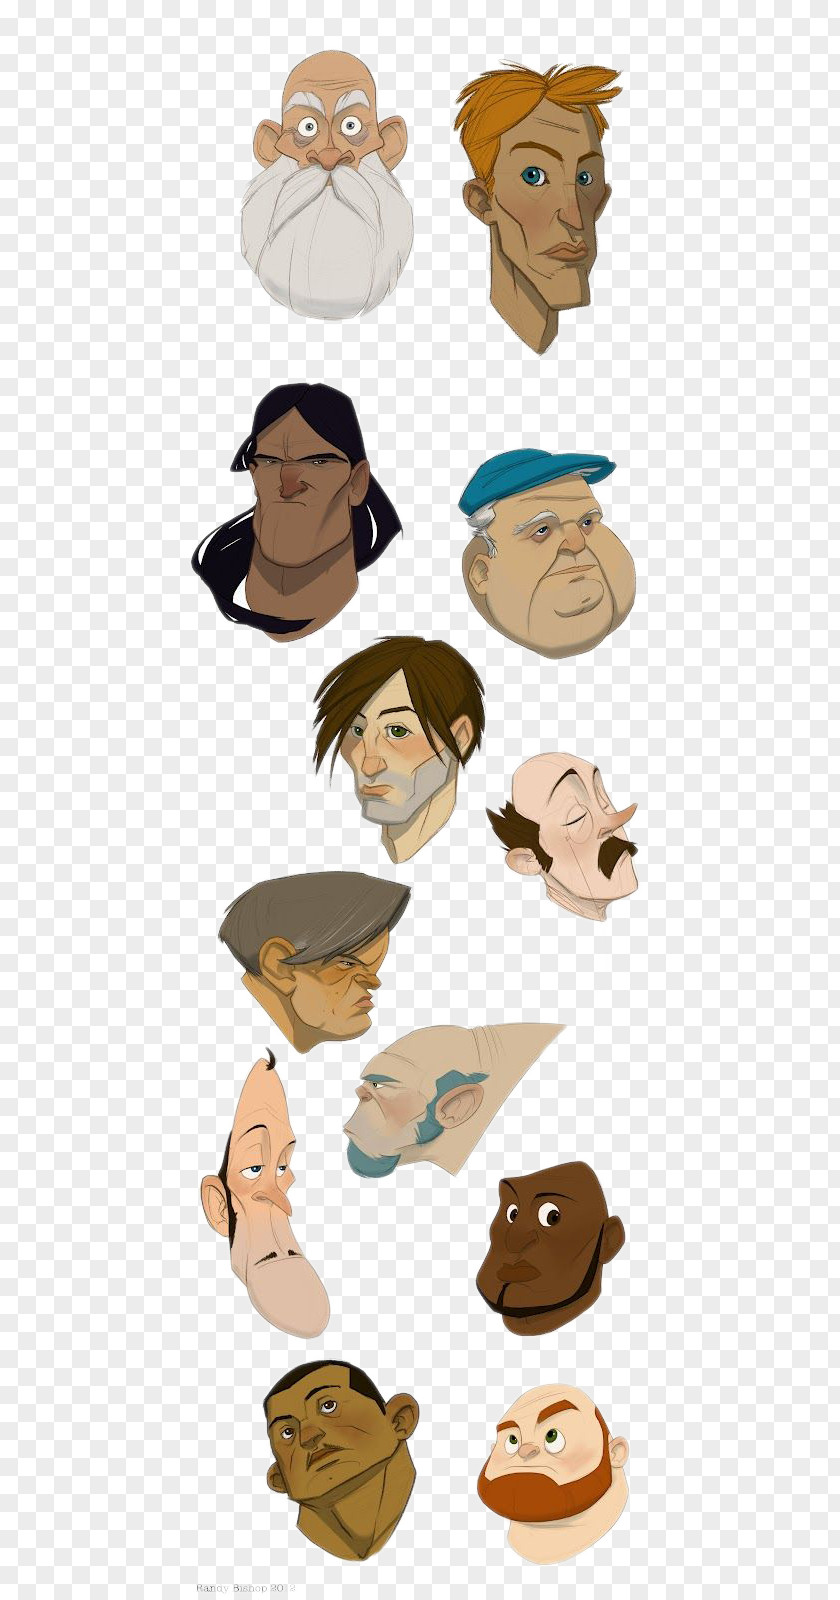 Man Avatar Cartoon Character Design Animation Illustration PNG